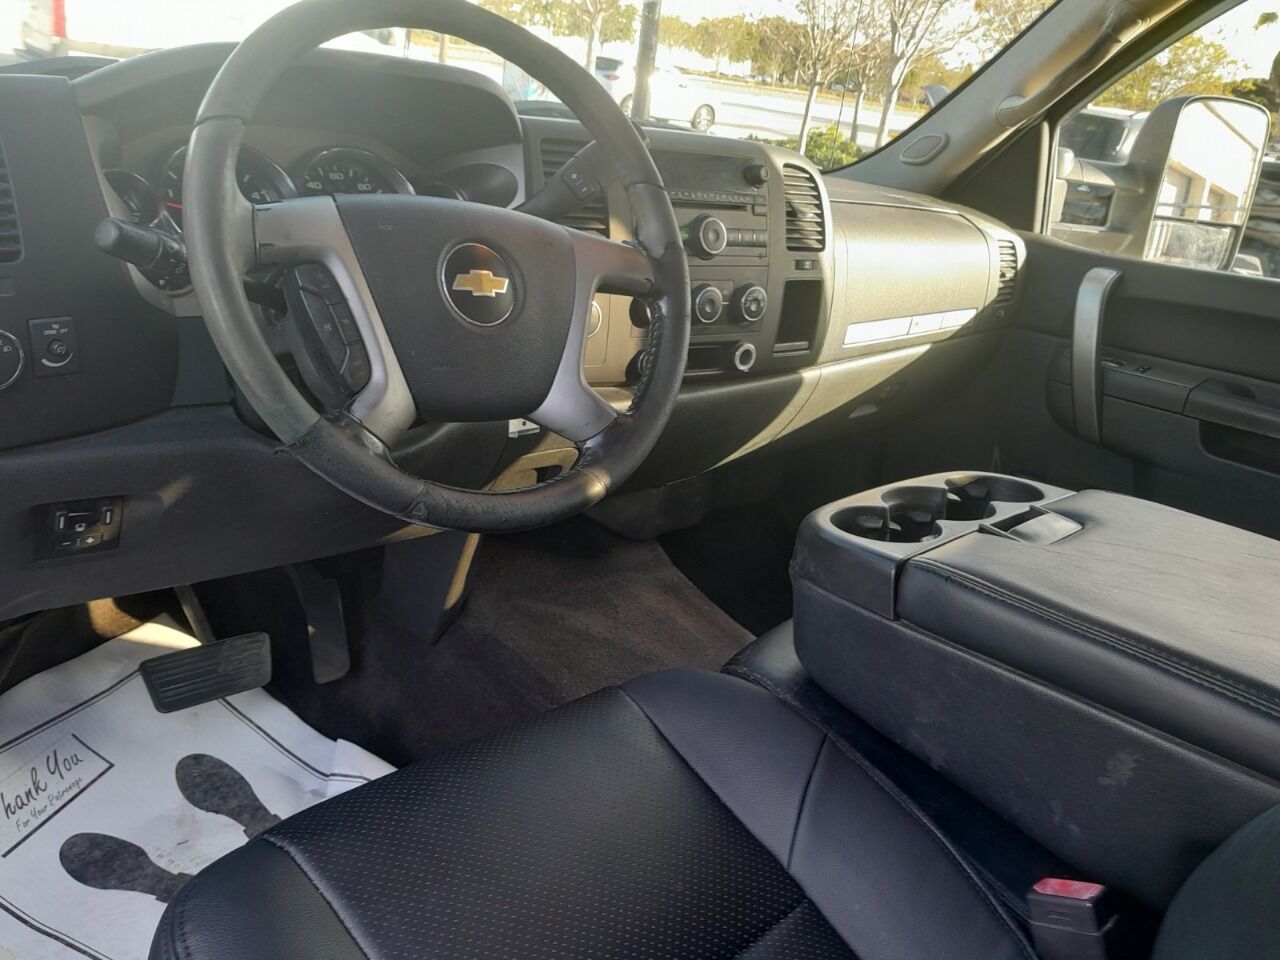 2014 Chevrolet Silverado Pickup - $16,950